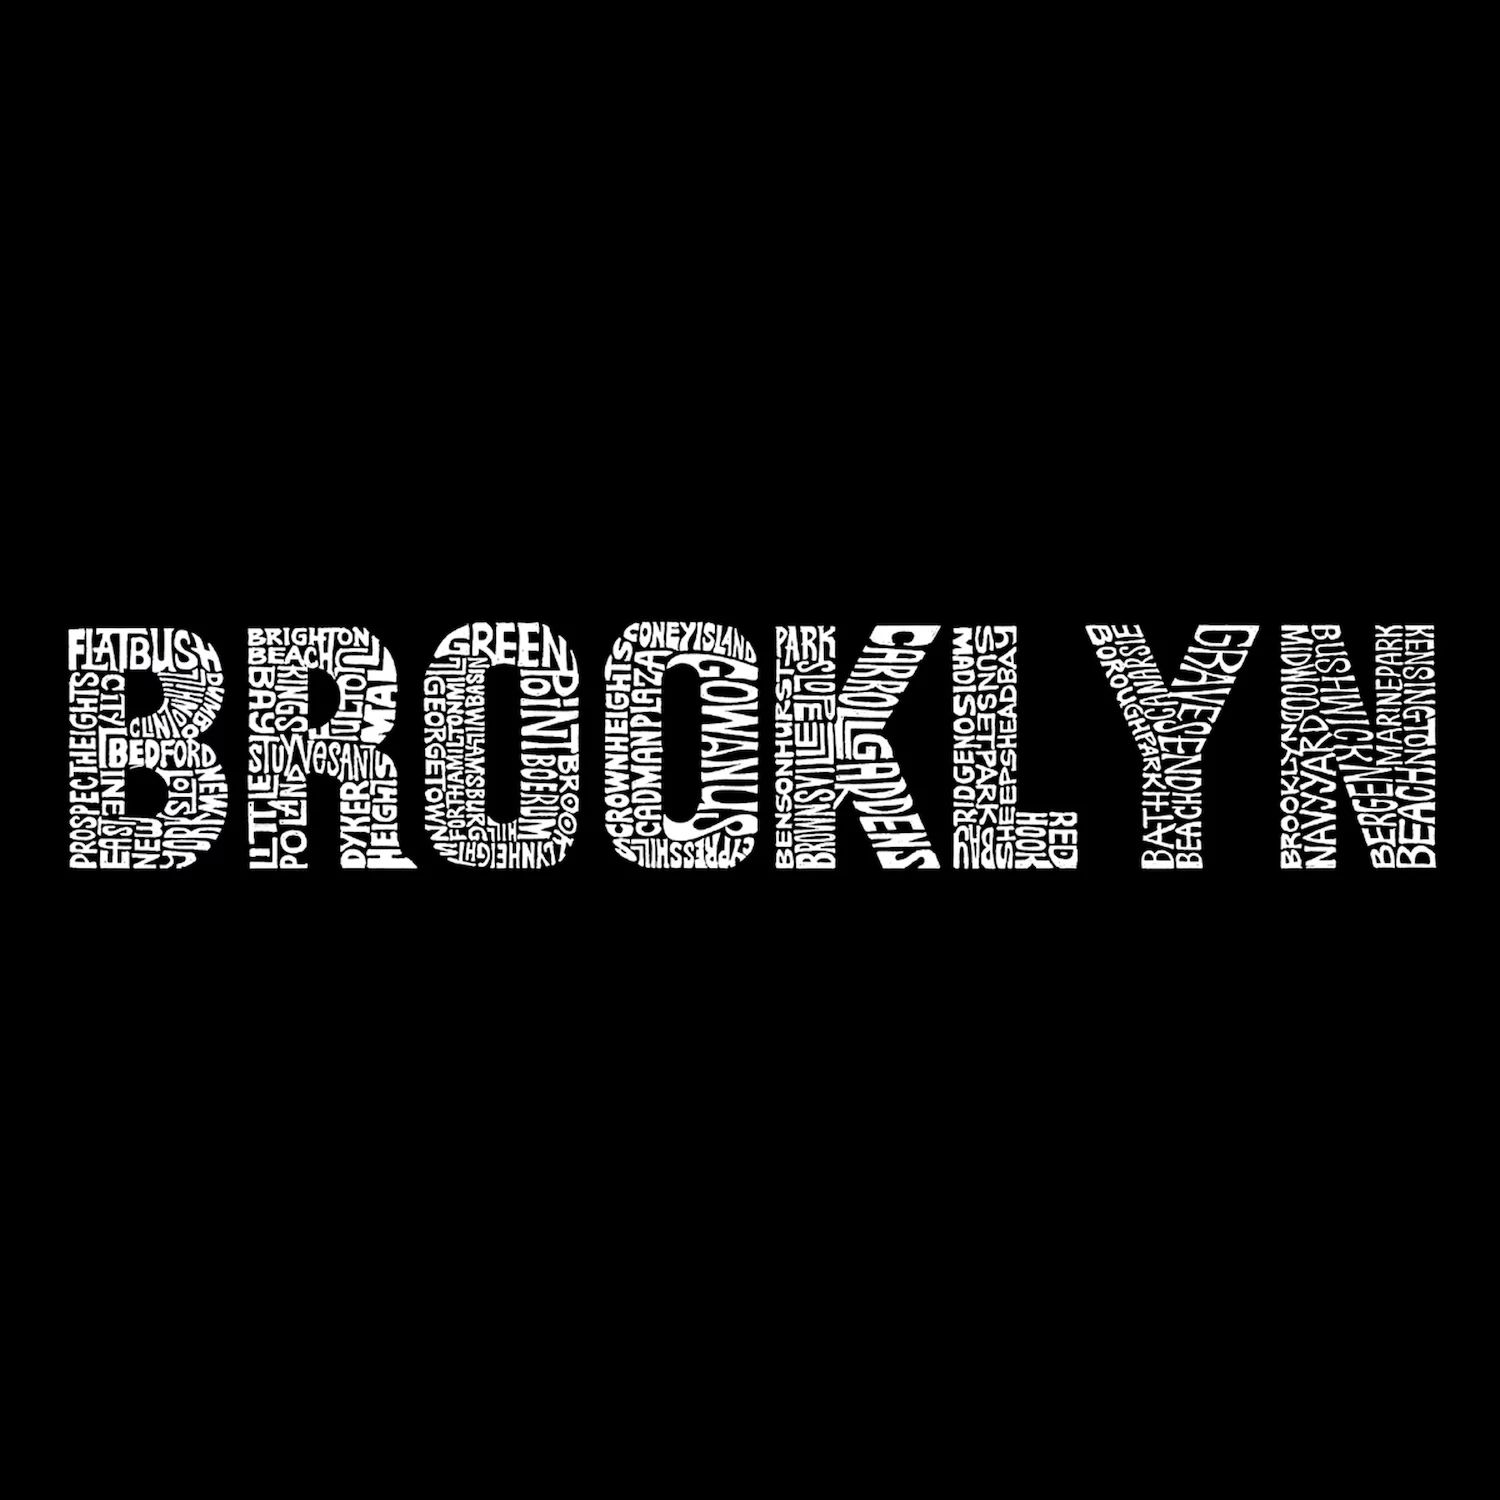 BROOKLYN NEIGHBORHOODS — мужская футболка премиум-класса с надписью Word Art LA Pop Art мужская футболка с надписью reglan и надписью neighborhoods in new york city la pop art черный